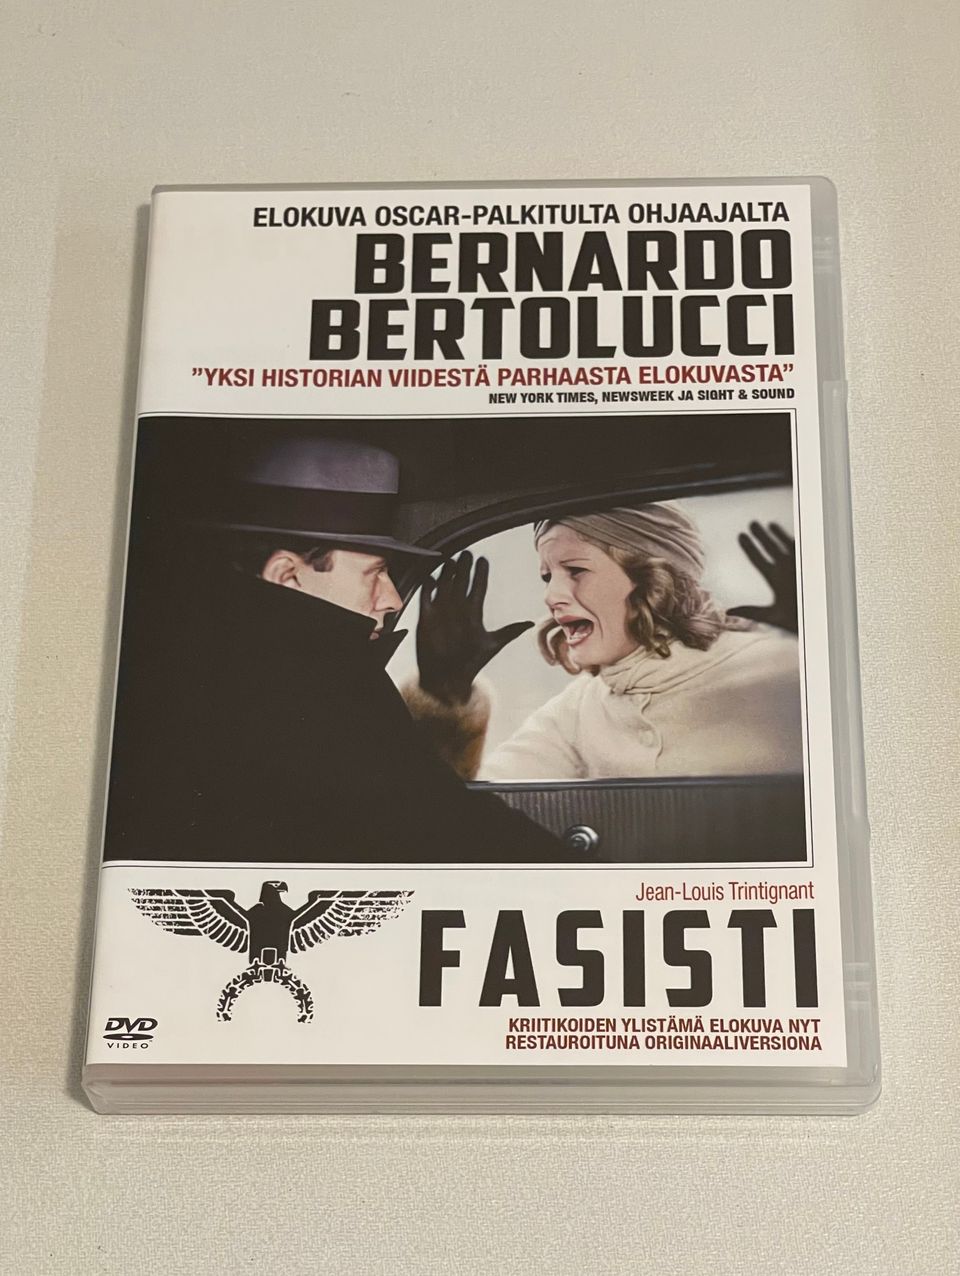 Fasisti (Bernardo Bertolucci) DVD